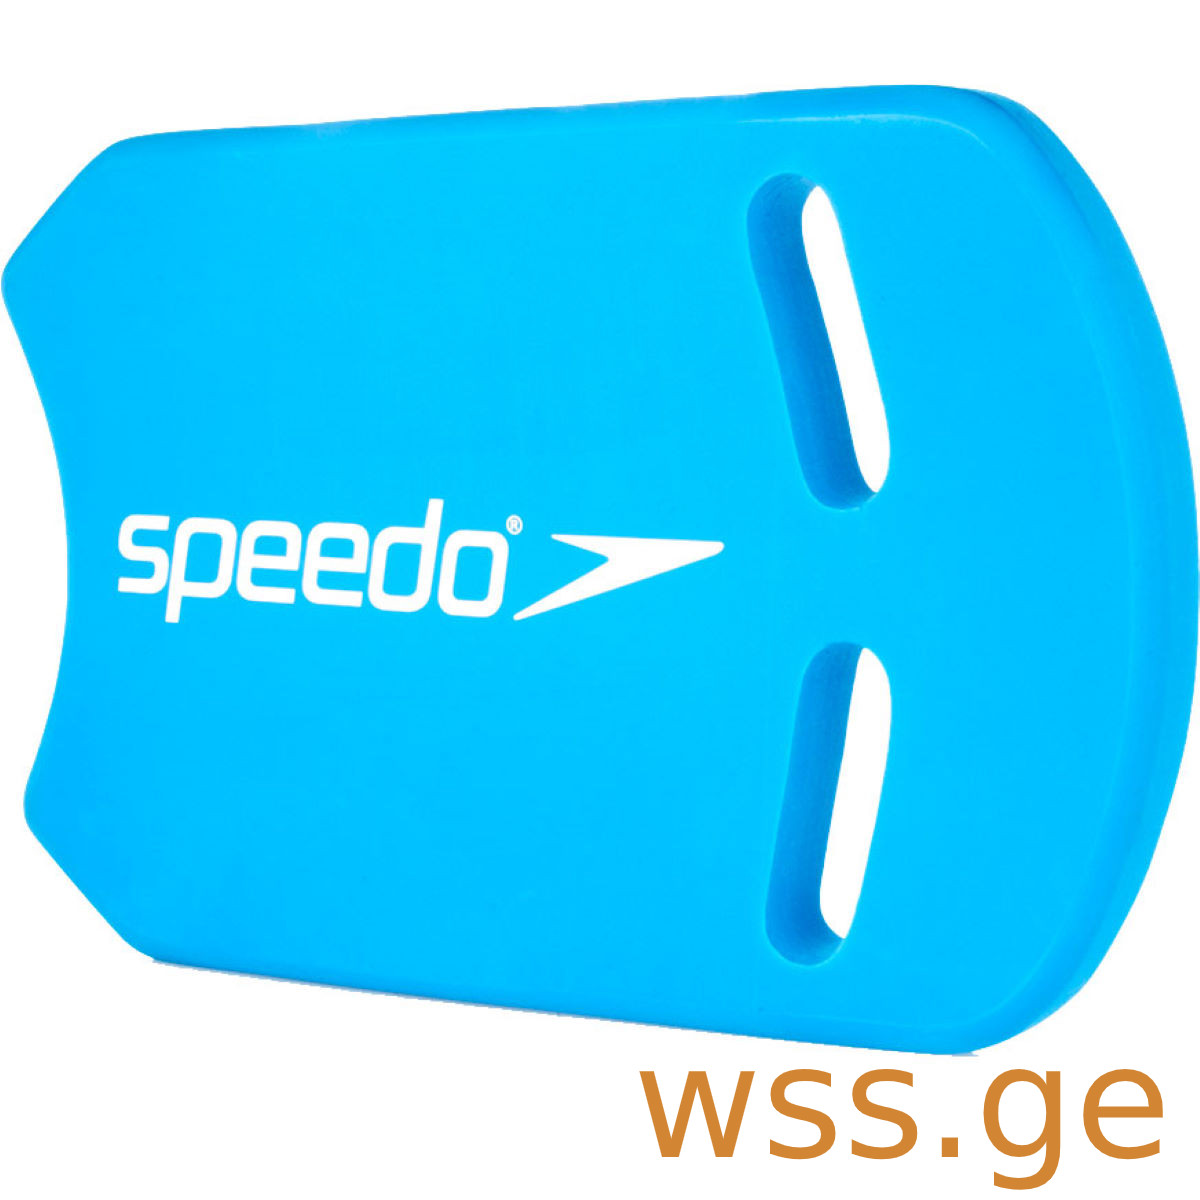 SPEEDO Swim kickboard.jpg